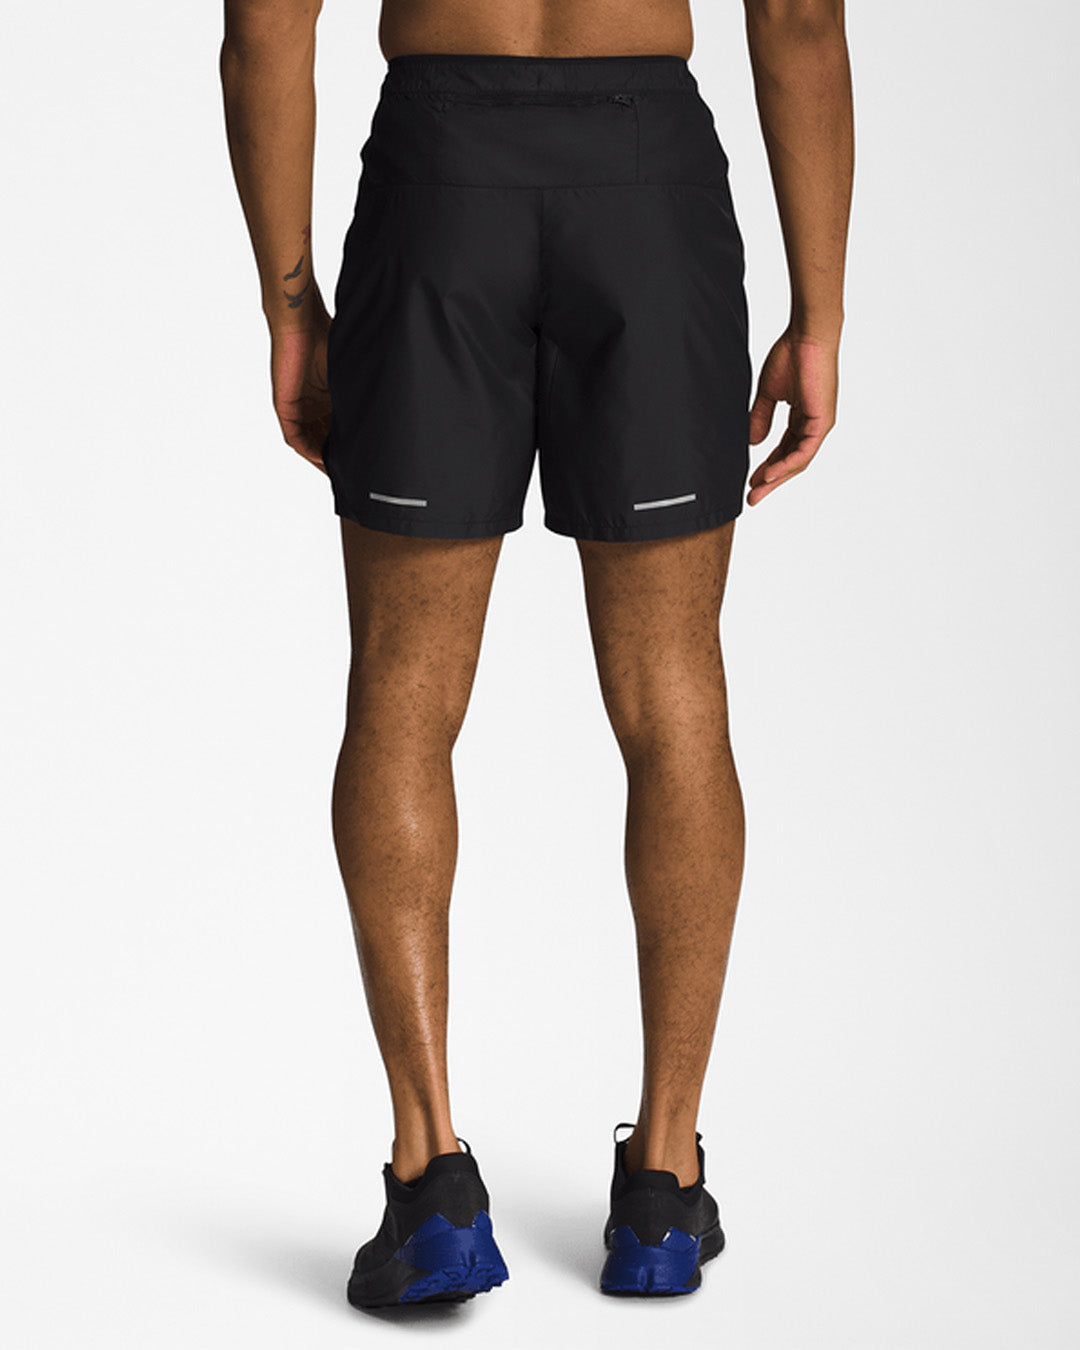 Limitless Run Shorts